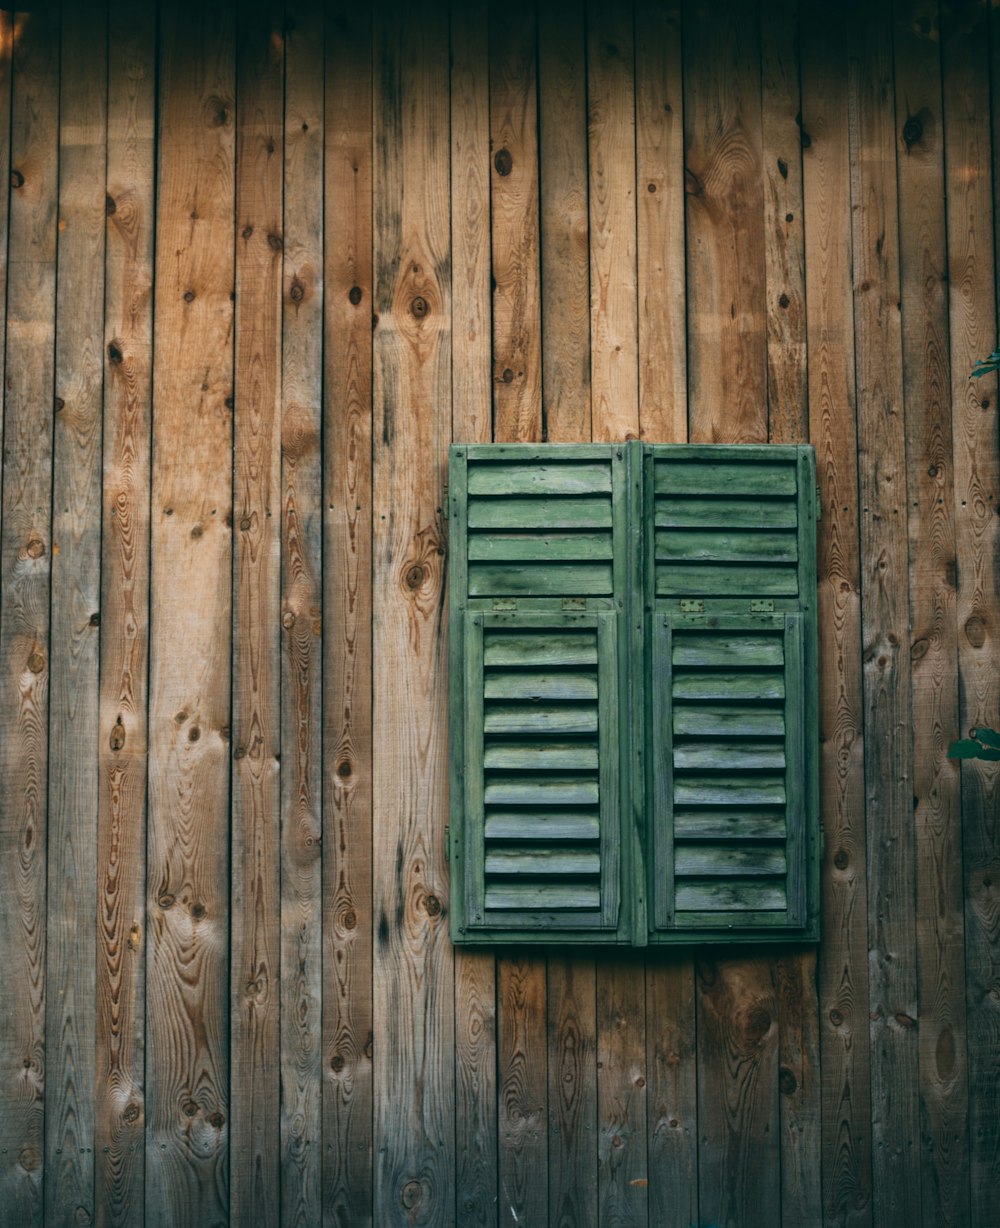 a green shuttered window on a wooden wall